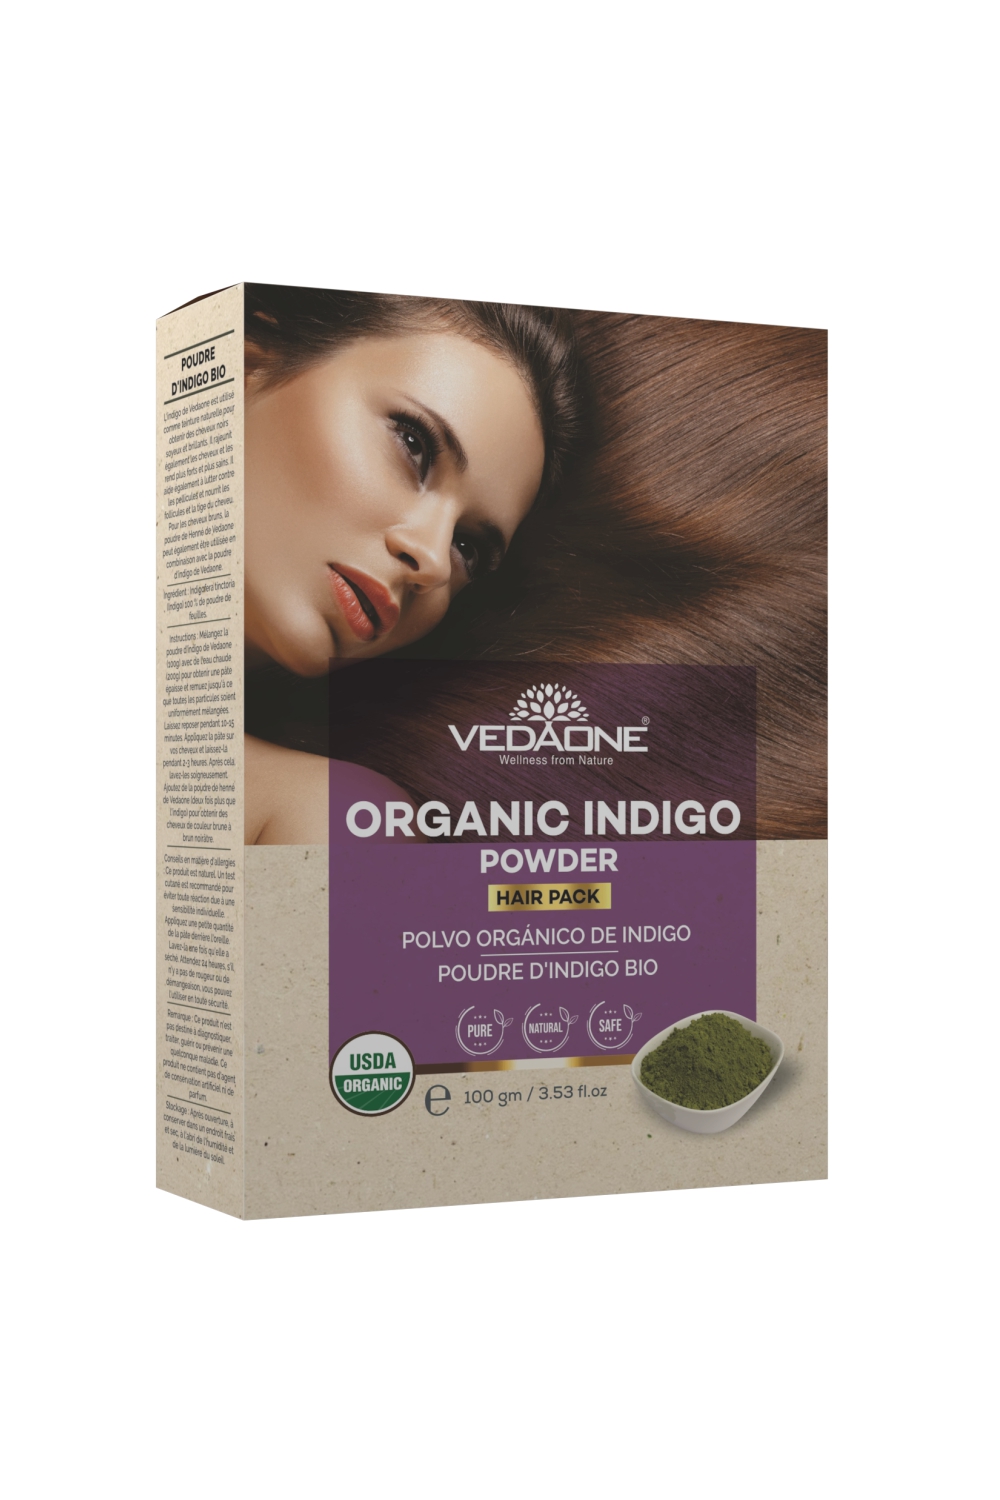 Vedaone USDA Organic Indigo Hair Pack Powder 100g, For Hair Care & Hair  Growth – Atrey Pharmaceuticals Private Limited.